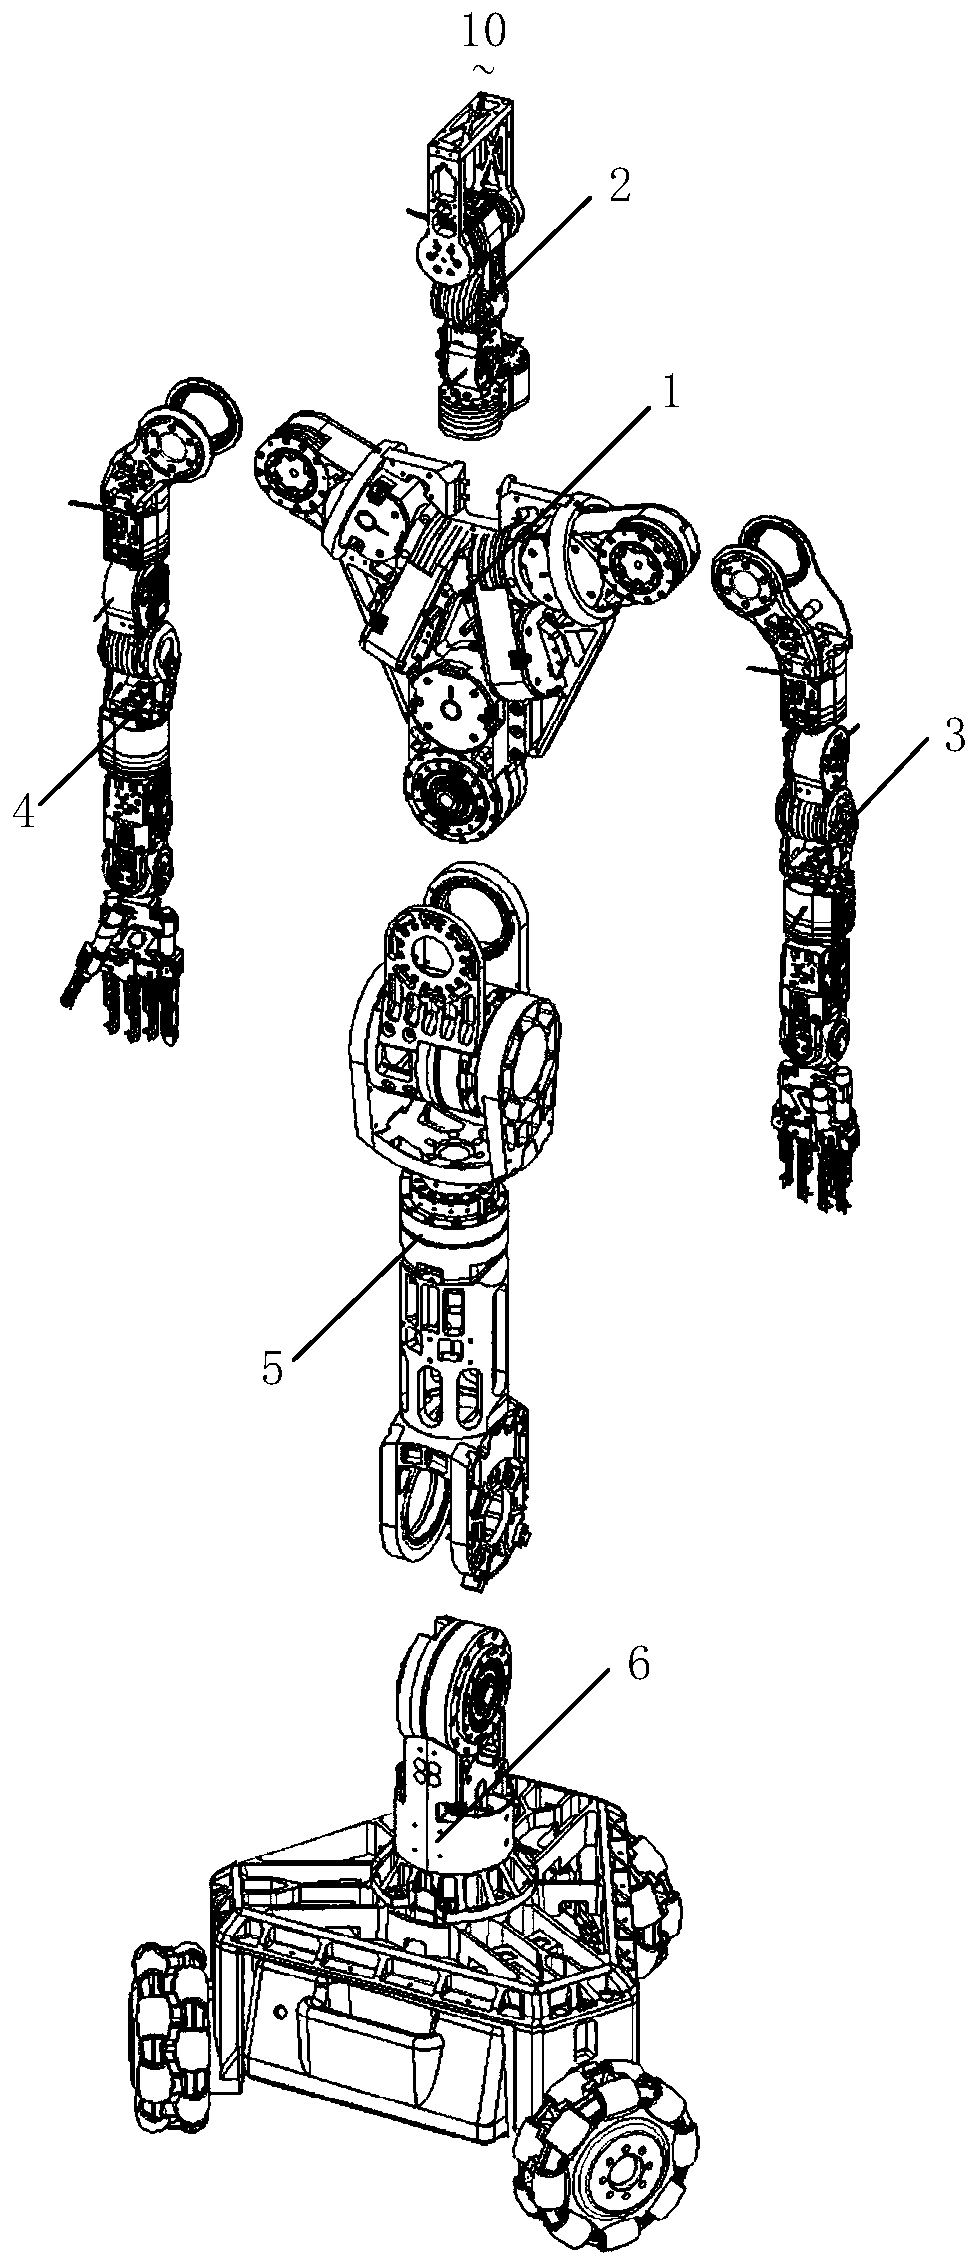 Robot internal skeleton and robot